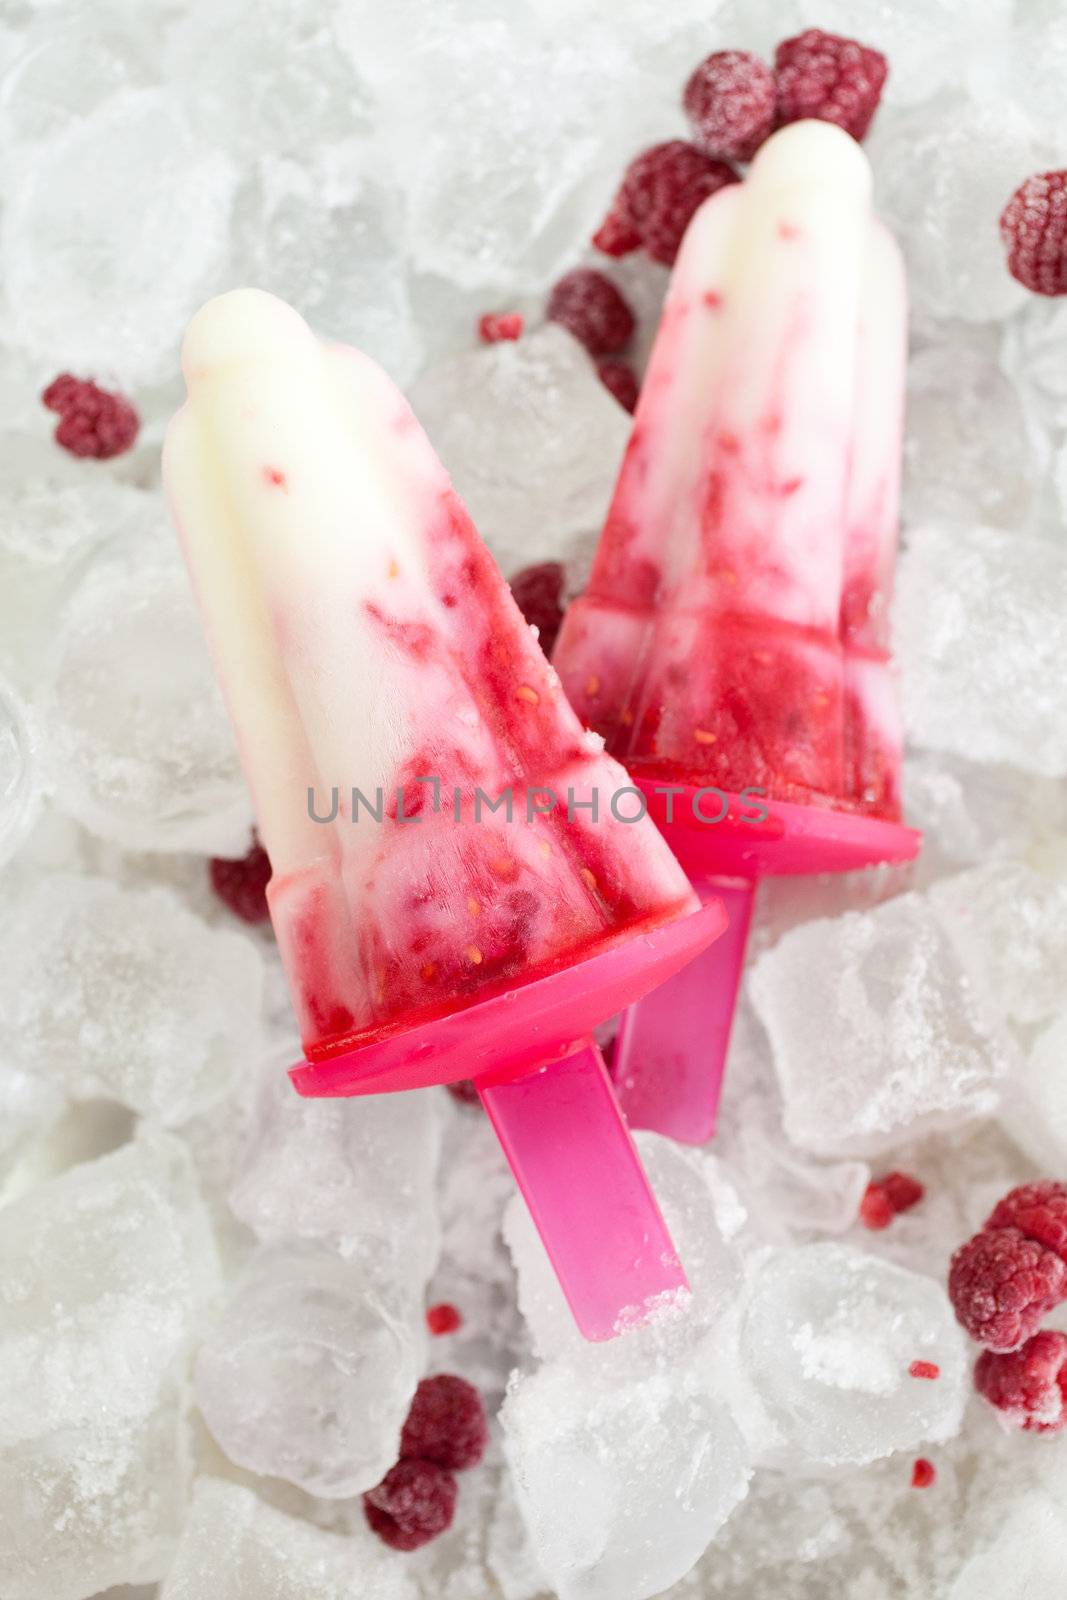 Delicious and refreshing raspberry yogurt icecream popsicles







Delicious and refreshing icecream popsicles